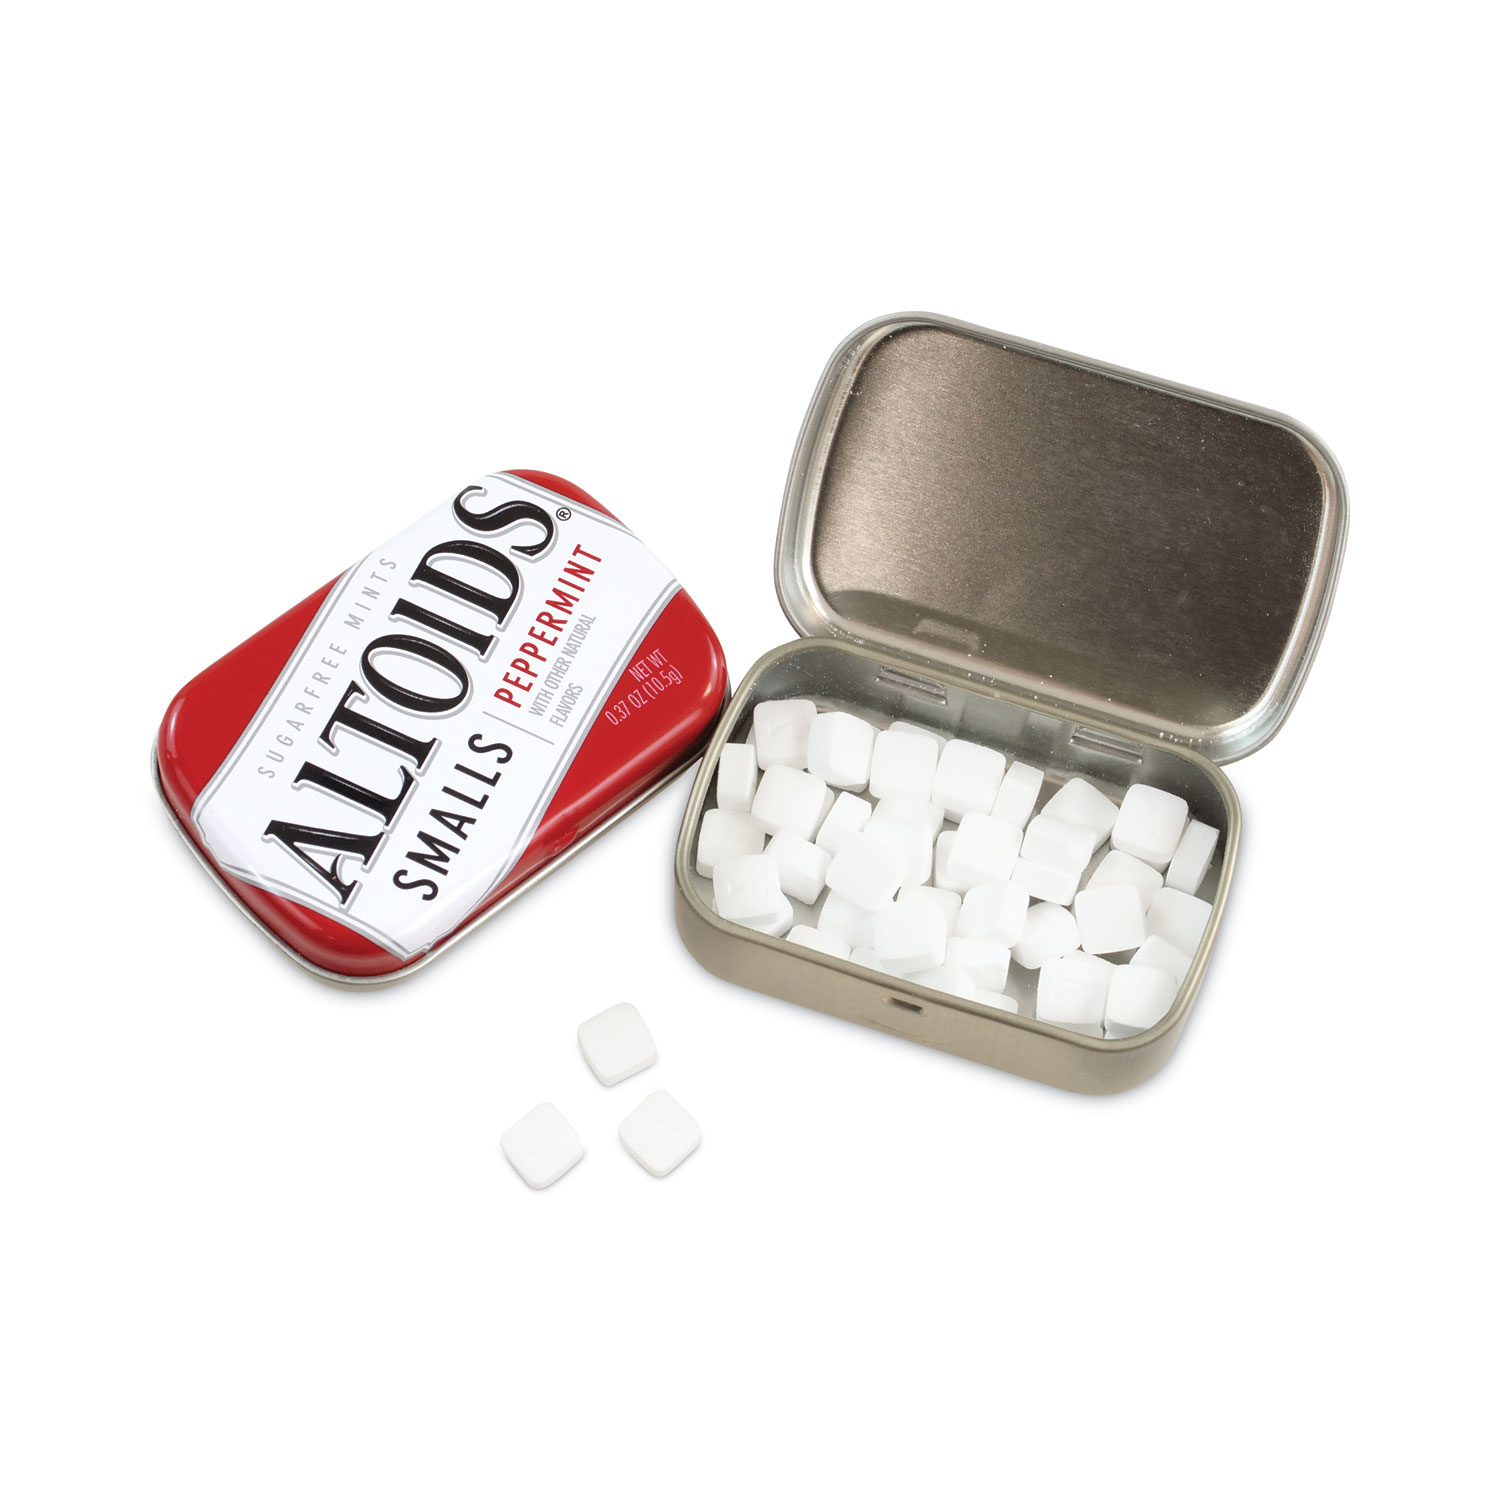 Altoids Smalls Sugar Free Wintergreen Mints, 0.37-Ounce Tins (2